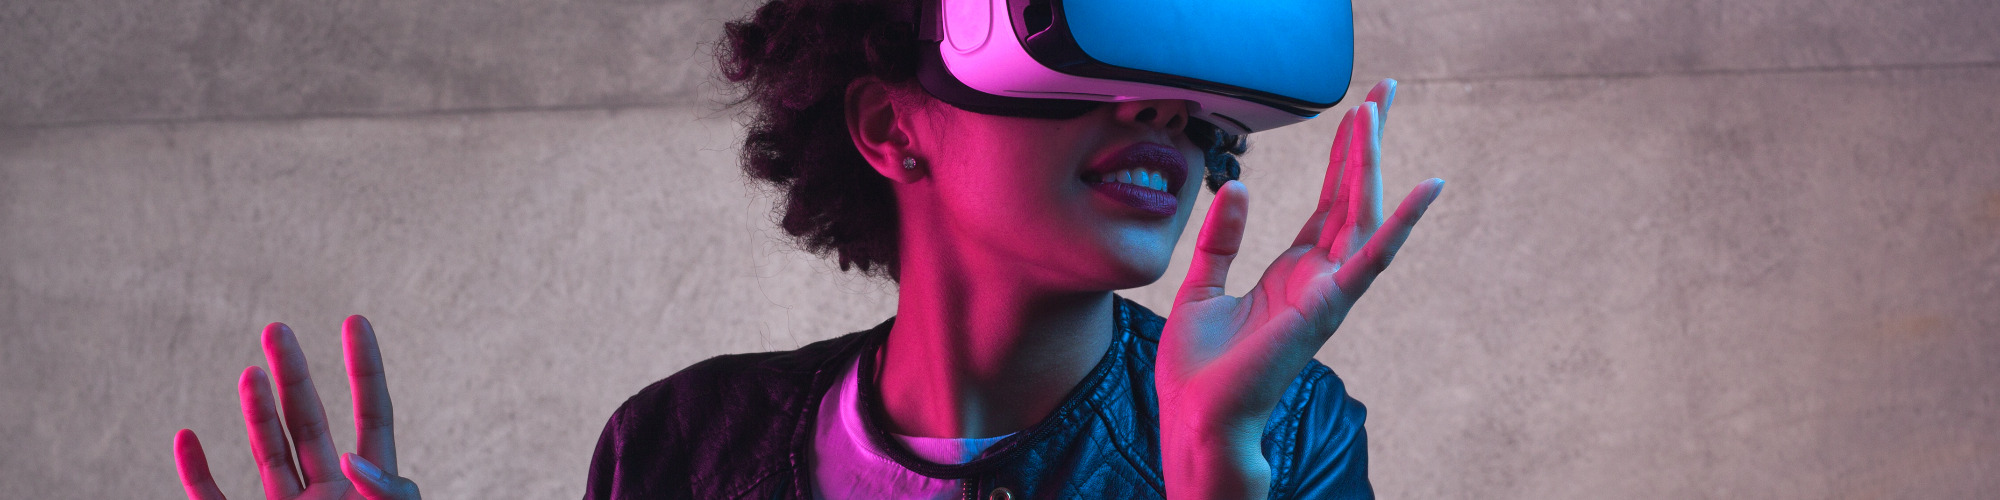 Live Entertainment - AI, Virtual Reality & the ‘Smart Stadium’ 